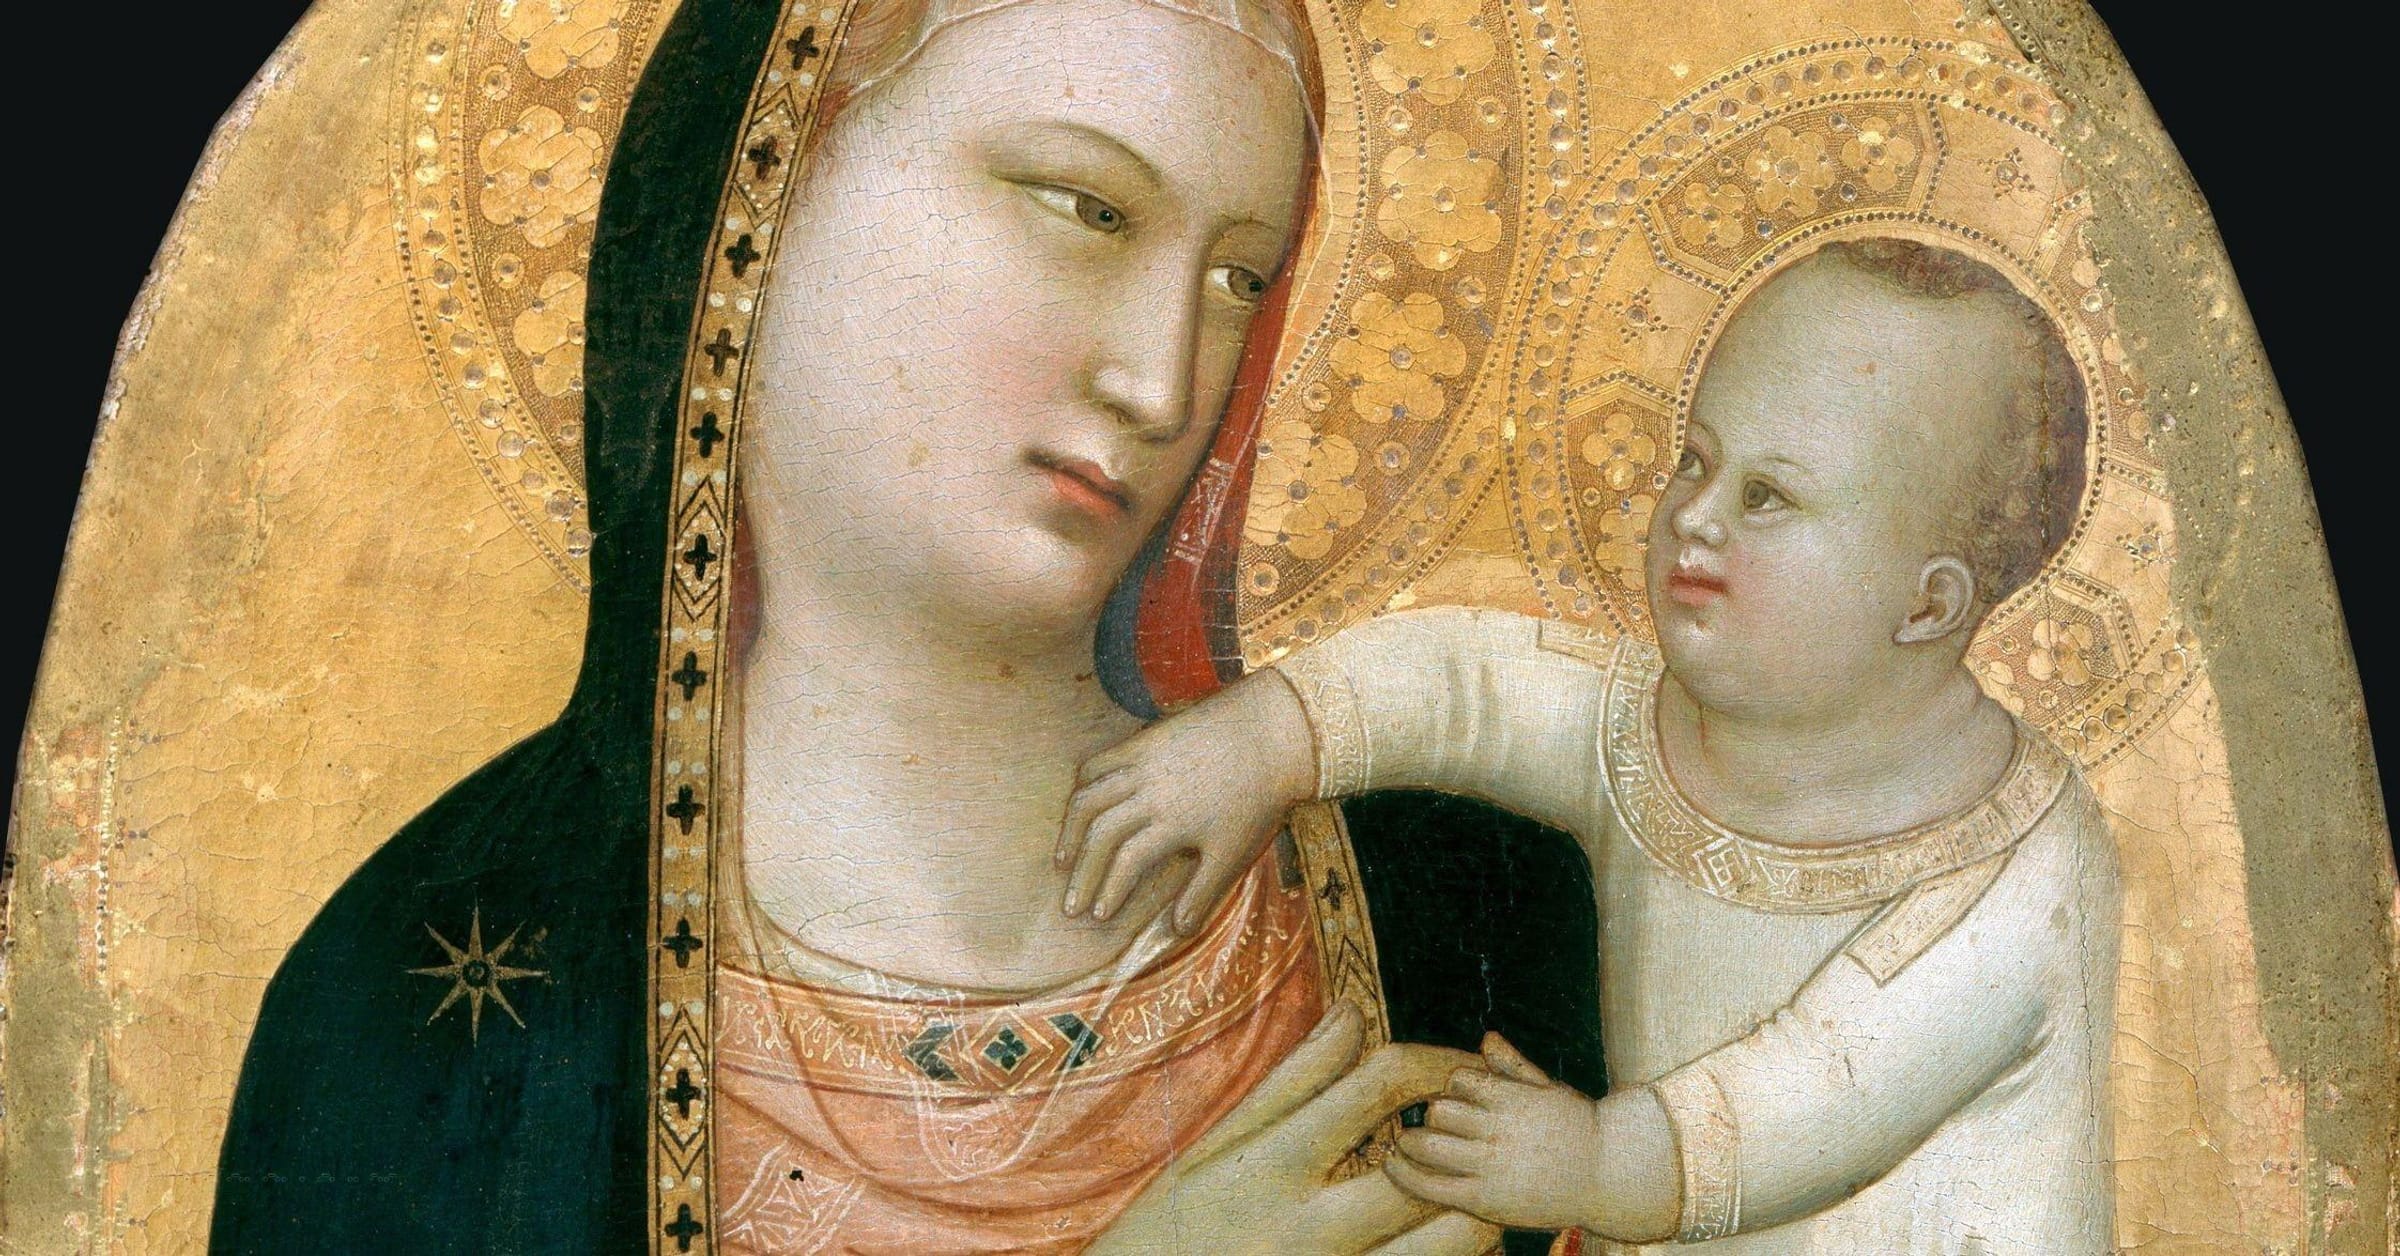 Why Babies In Medieval Art Look Like Creepy Adults